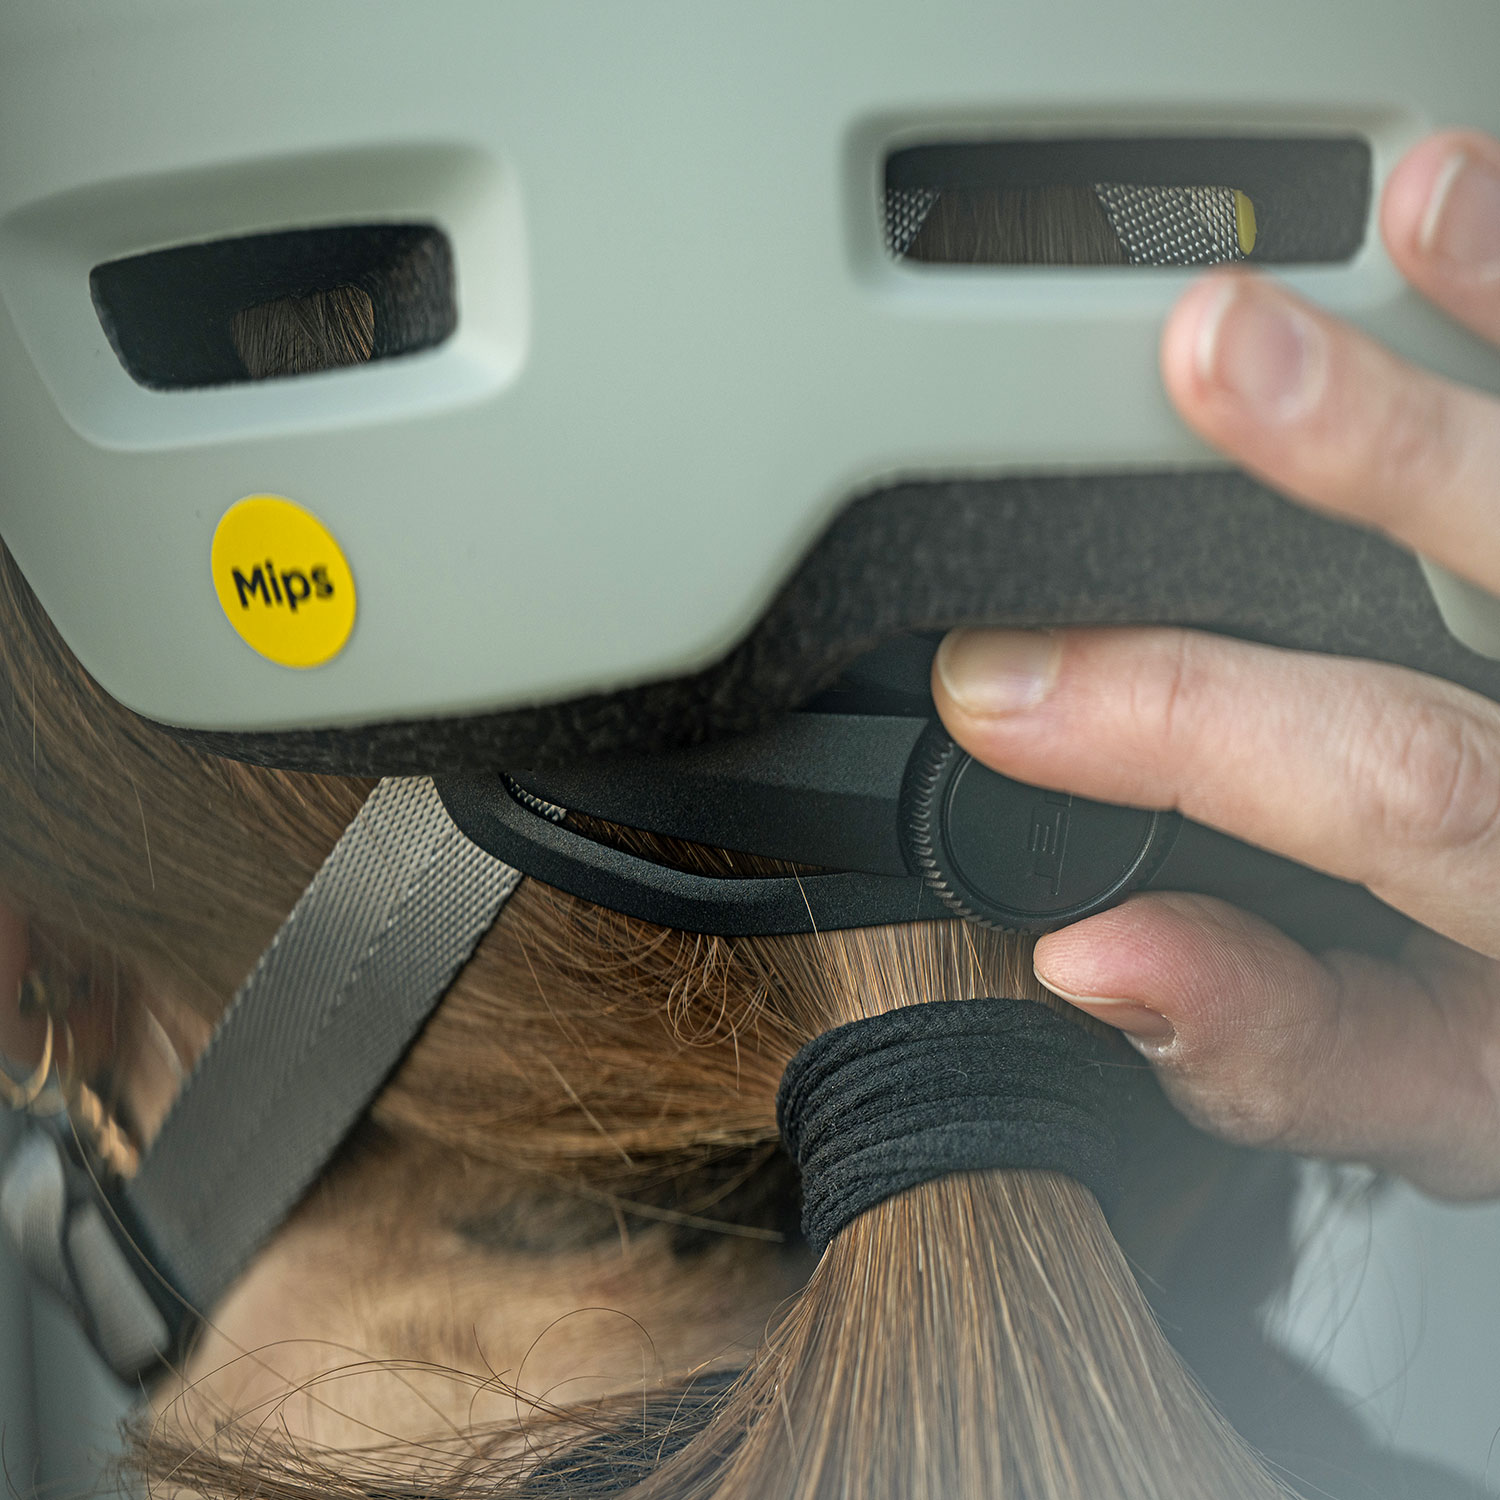 MET E-Mob MIPS urban ebike commuter helmet, pedelec NTA 8776-certified, 360° retention